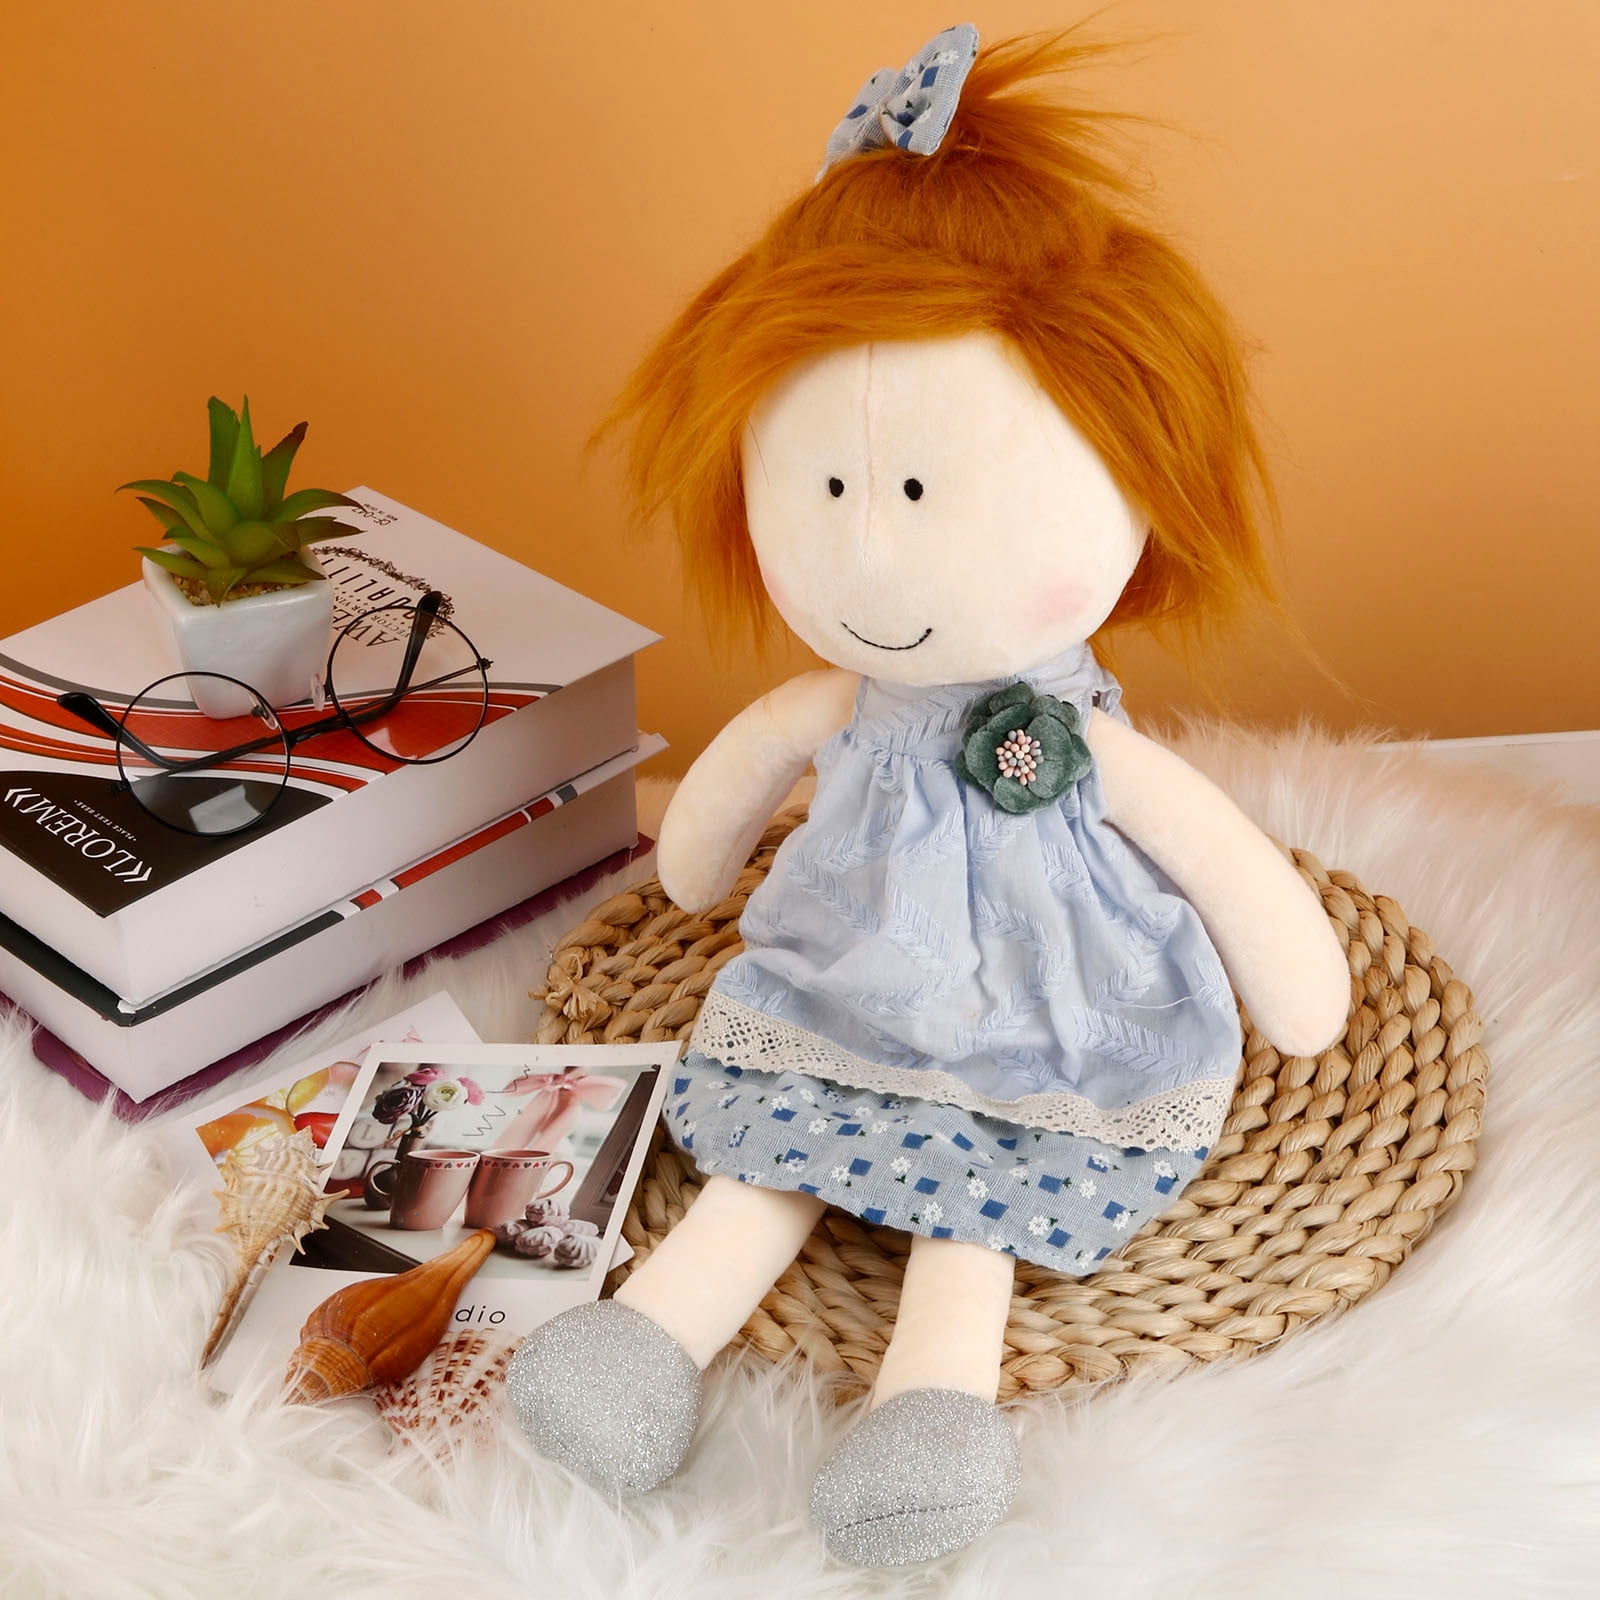 Unique cute collectible rag doll Interior art decor doll Summer Doll Blond hair doll Special gift Cloth doll handmade